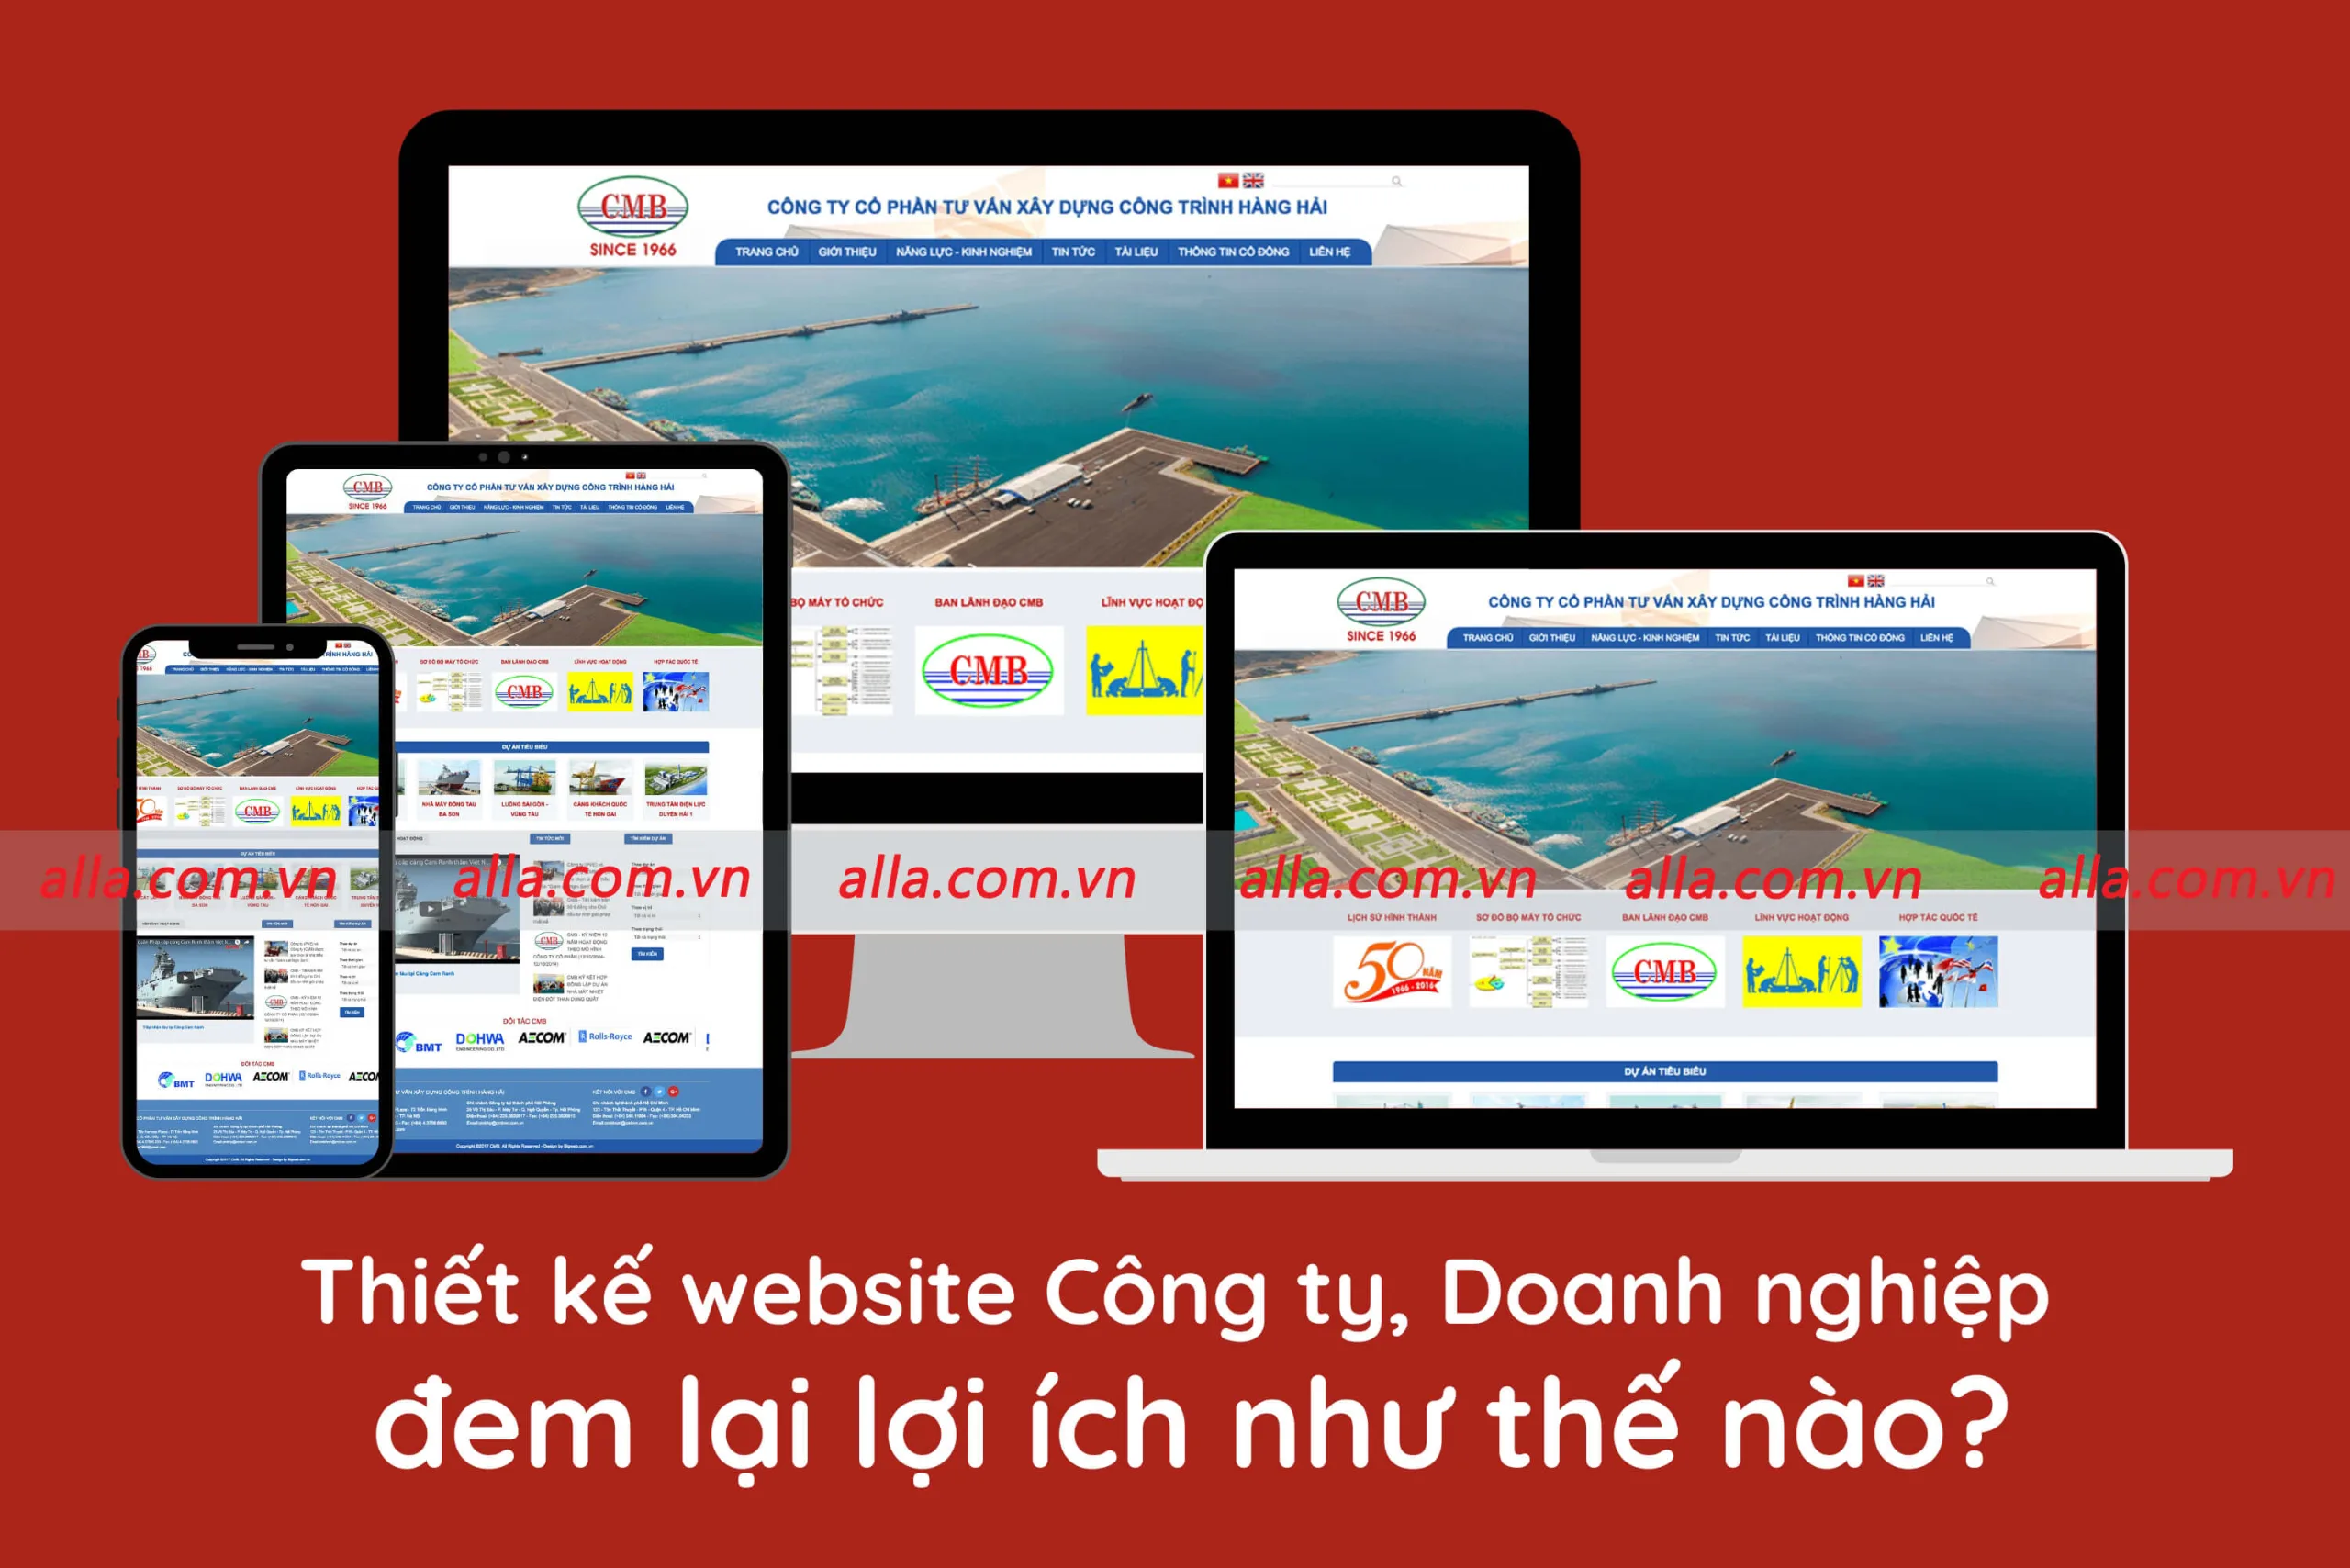 loi-ich-khi-thiet-ke-website-gioi-thieu-cong-ty-doanh-nghiep